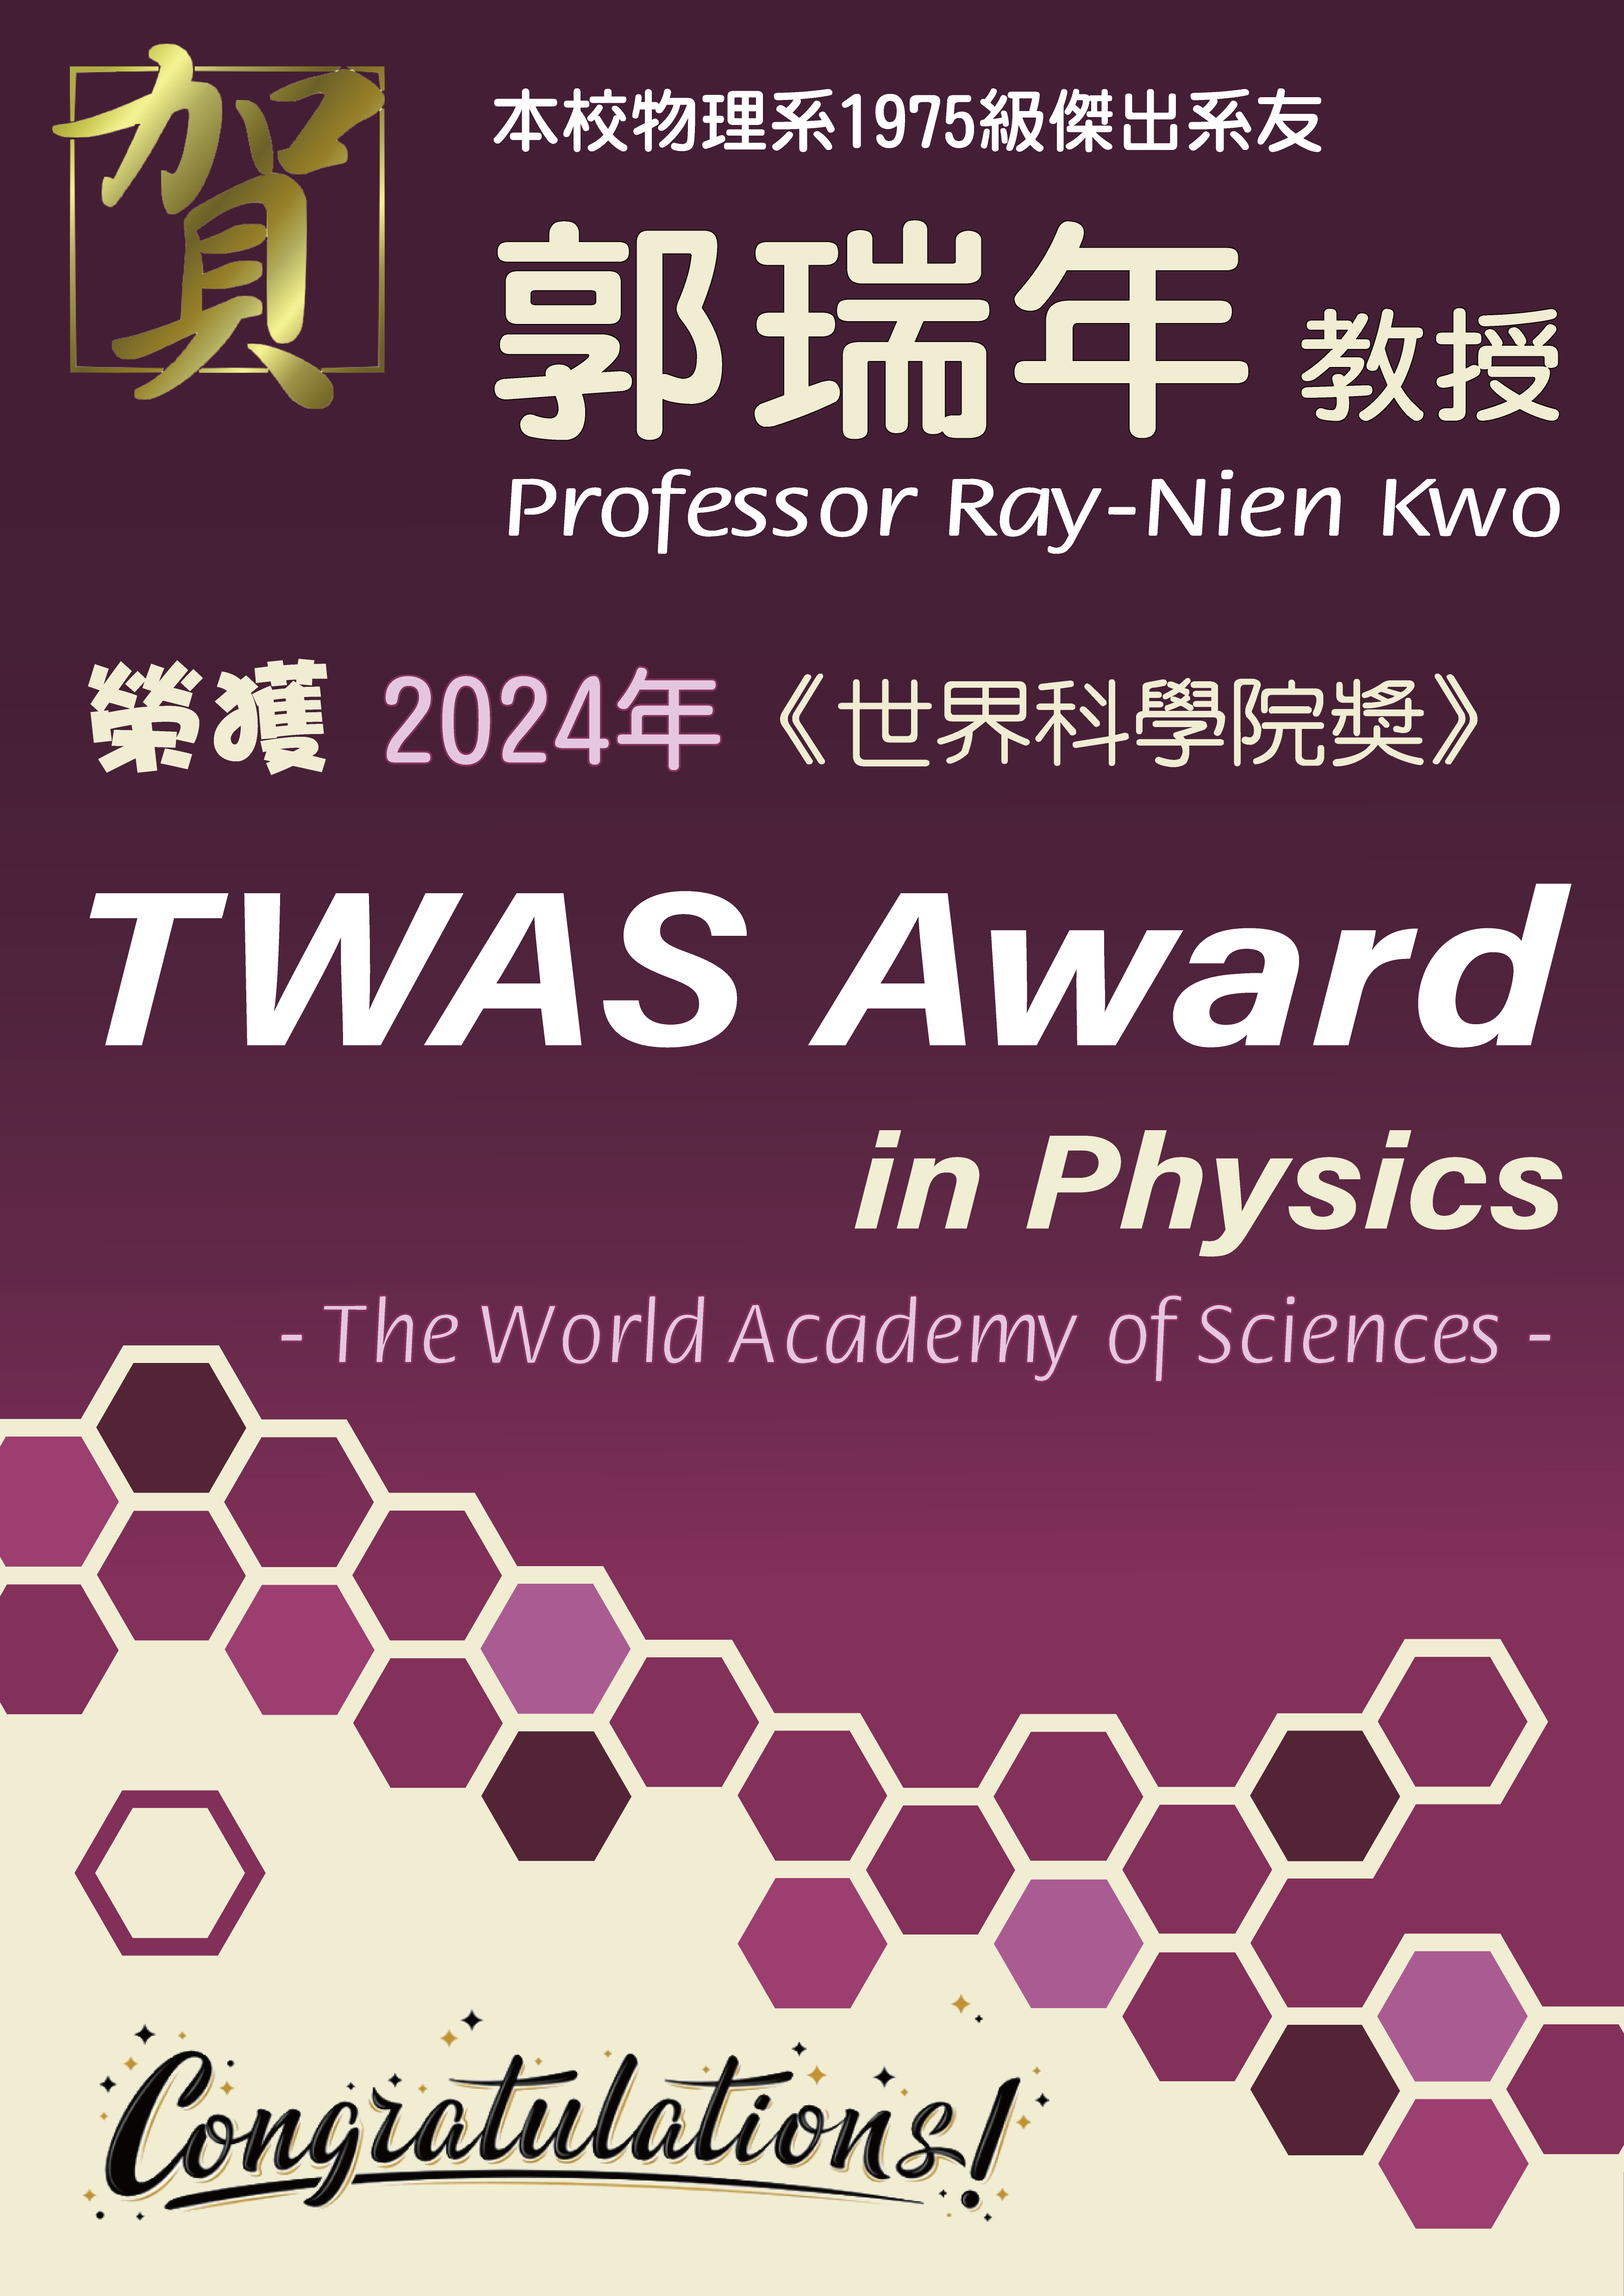 《賀》本系 1975級系友 郭瑞年教授 Prof. Ray-Nien Kwo 榮獲 2024年《世界科學院獎》(TWAS Awards in Physics)